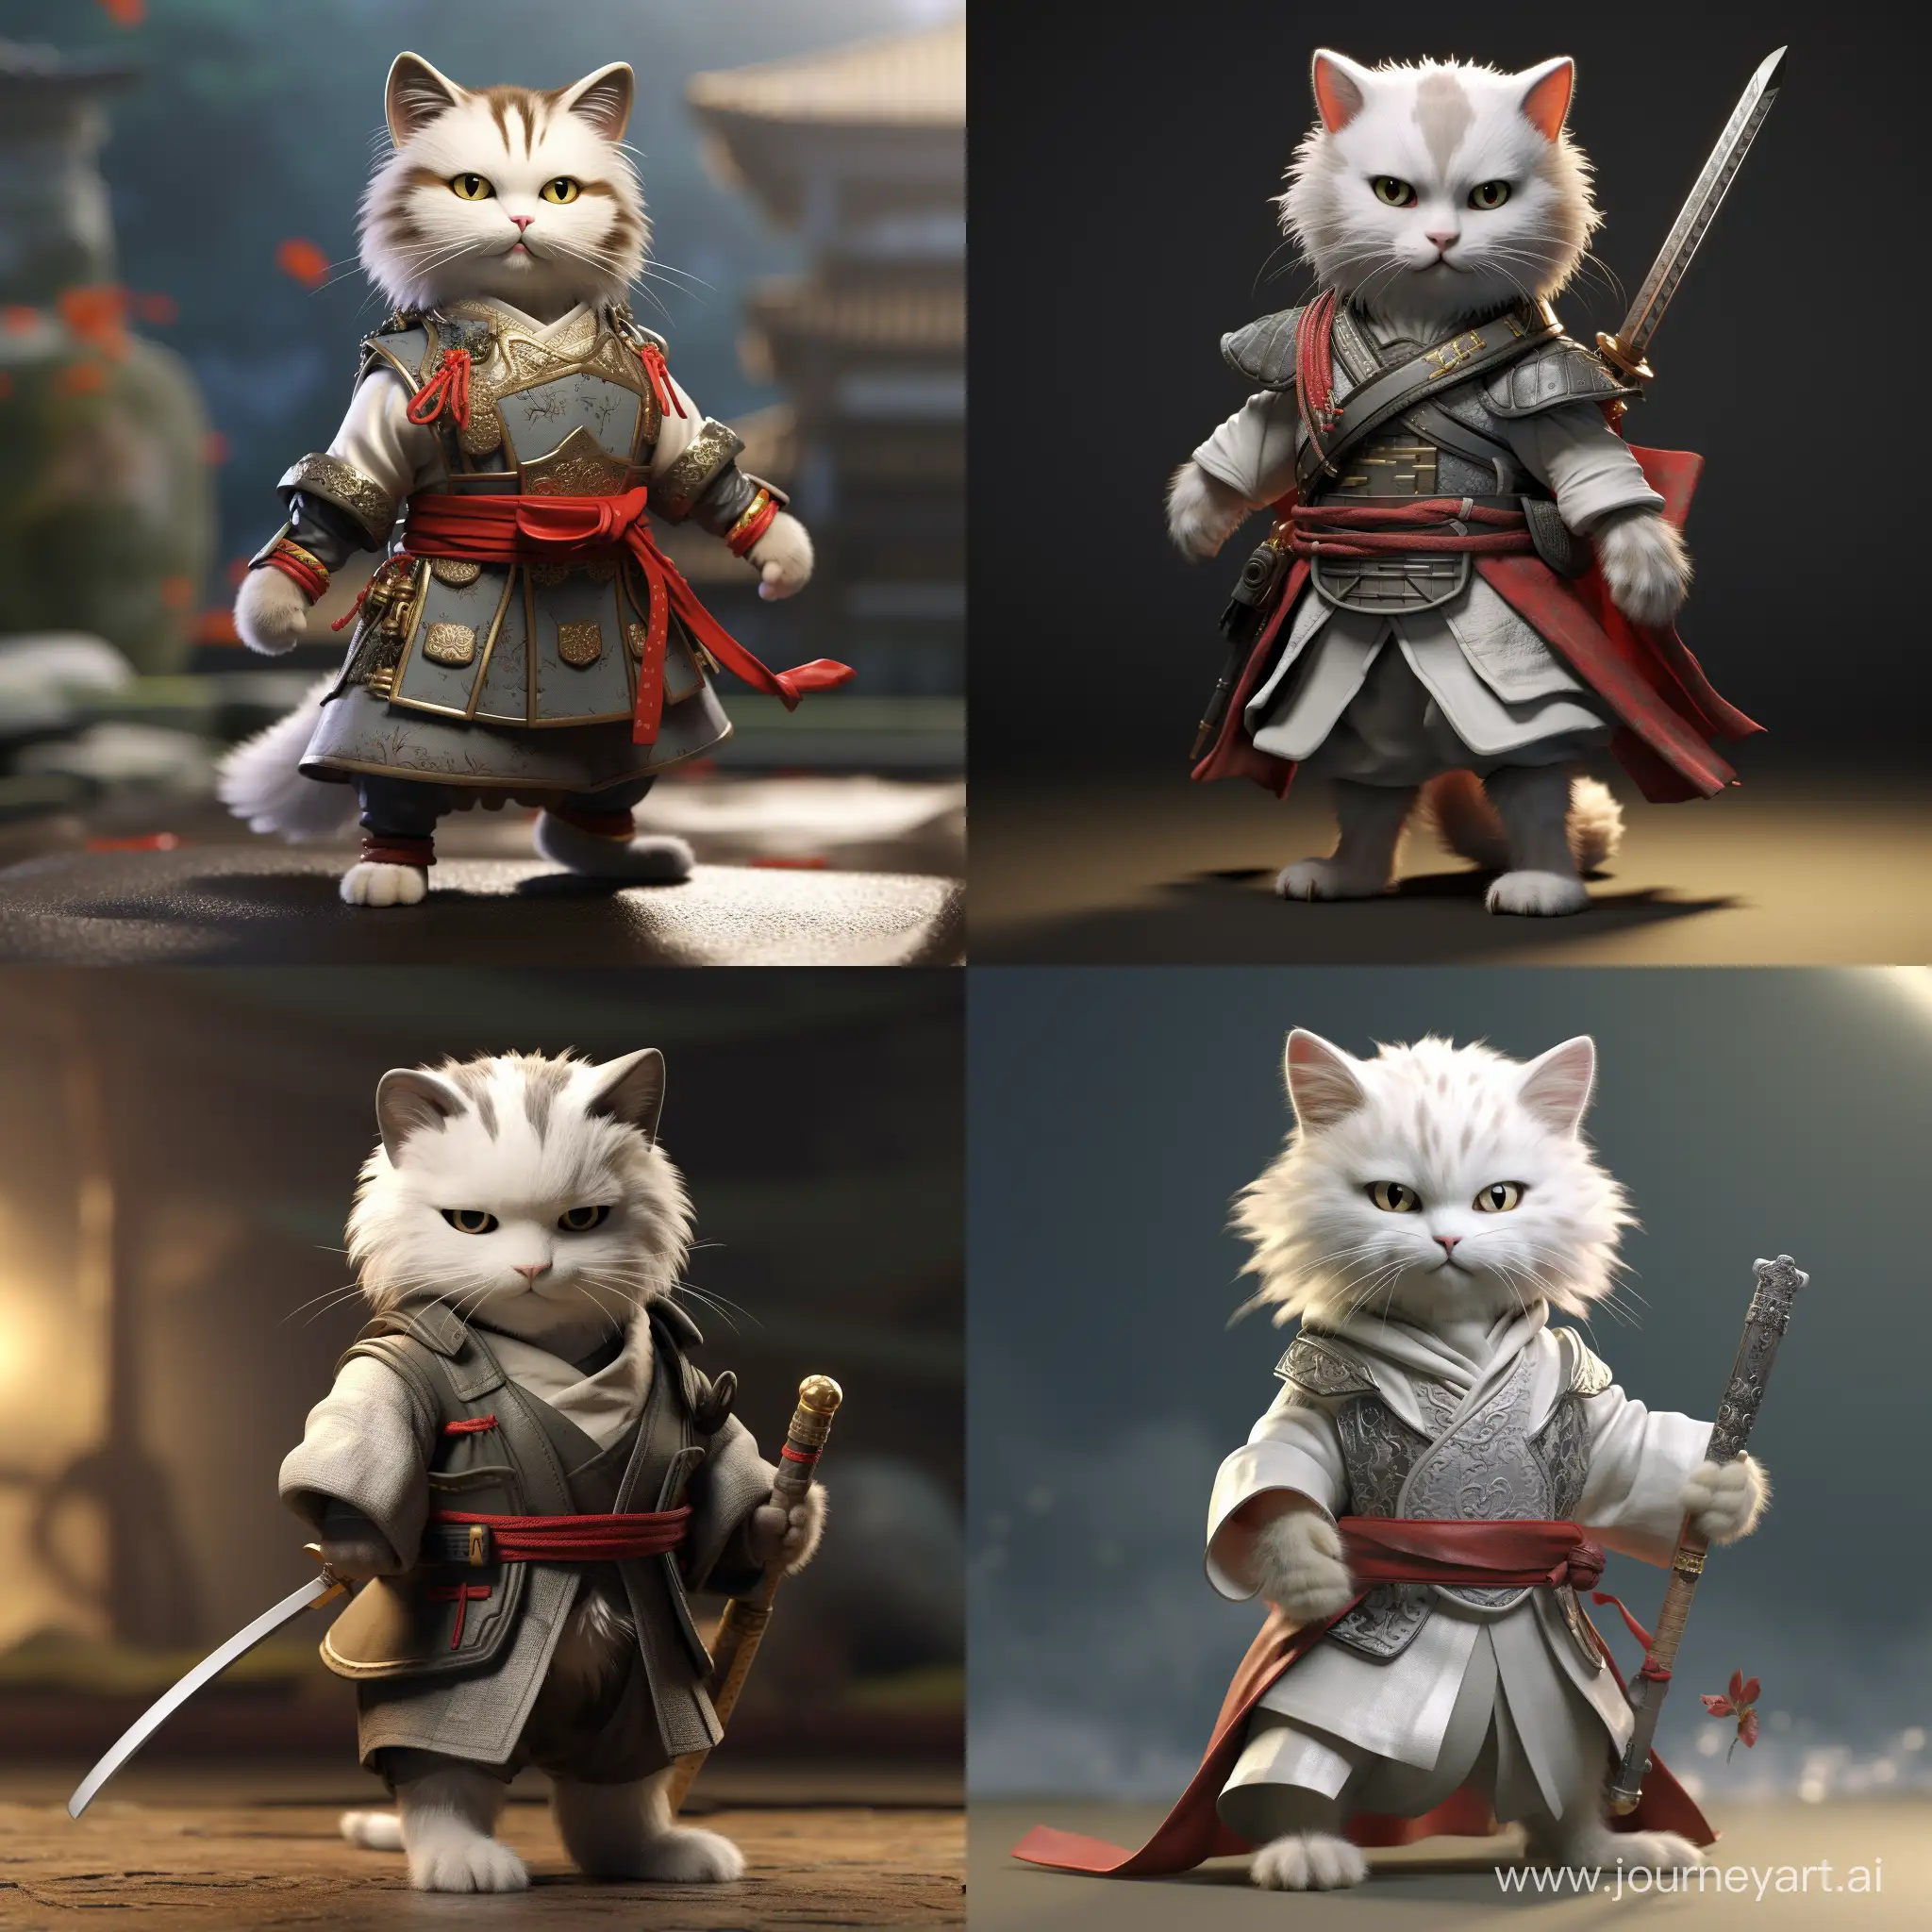 Samurai-Cat-3D-Realistic-Feline-Warrior-in-Human-Pose-with-Sword